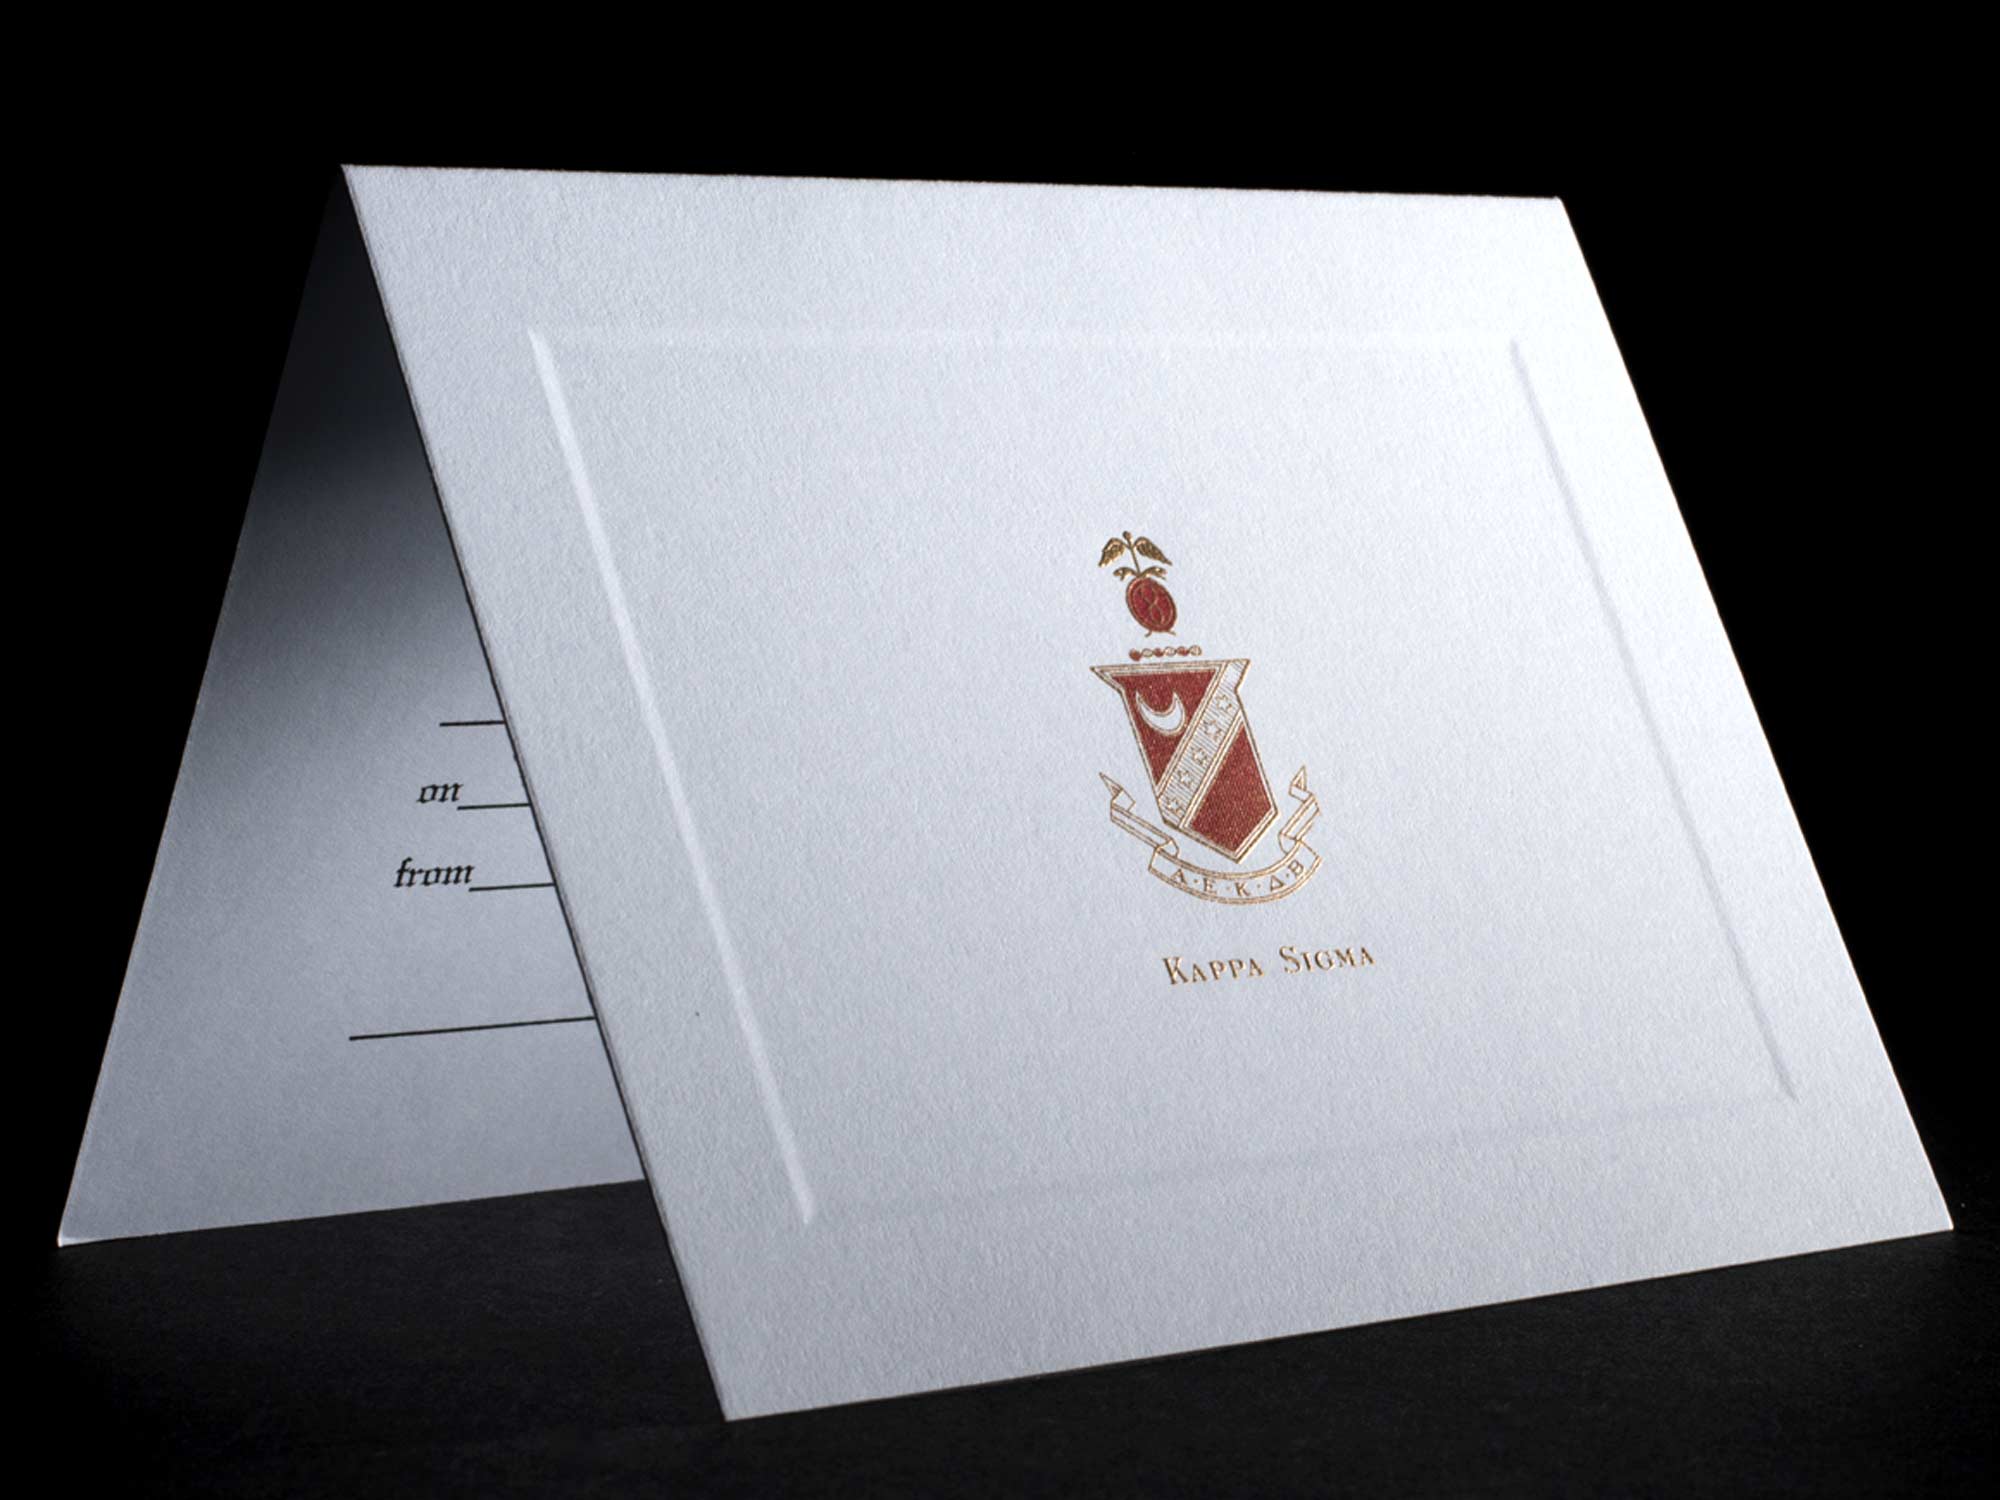 Engraved Invitations Kappa Sigma